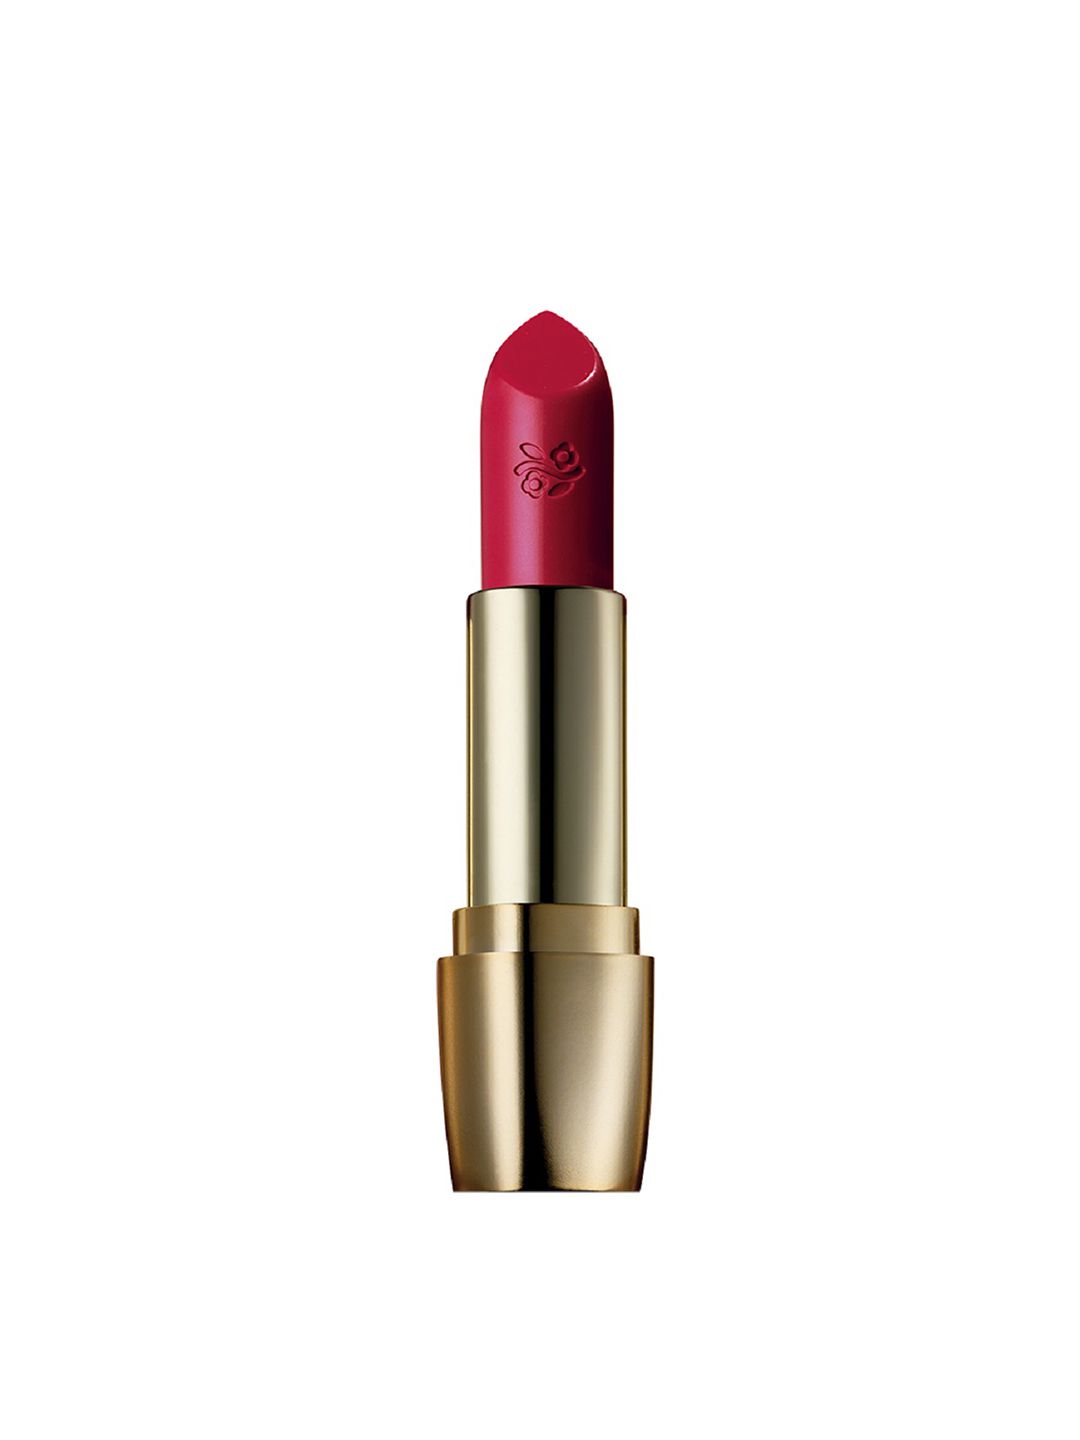 Deborah Rossetto Milano Pink Coral Lipstick 31 Price in India